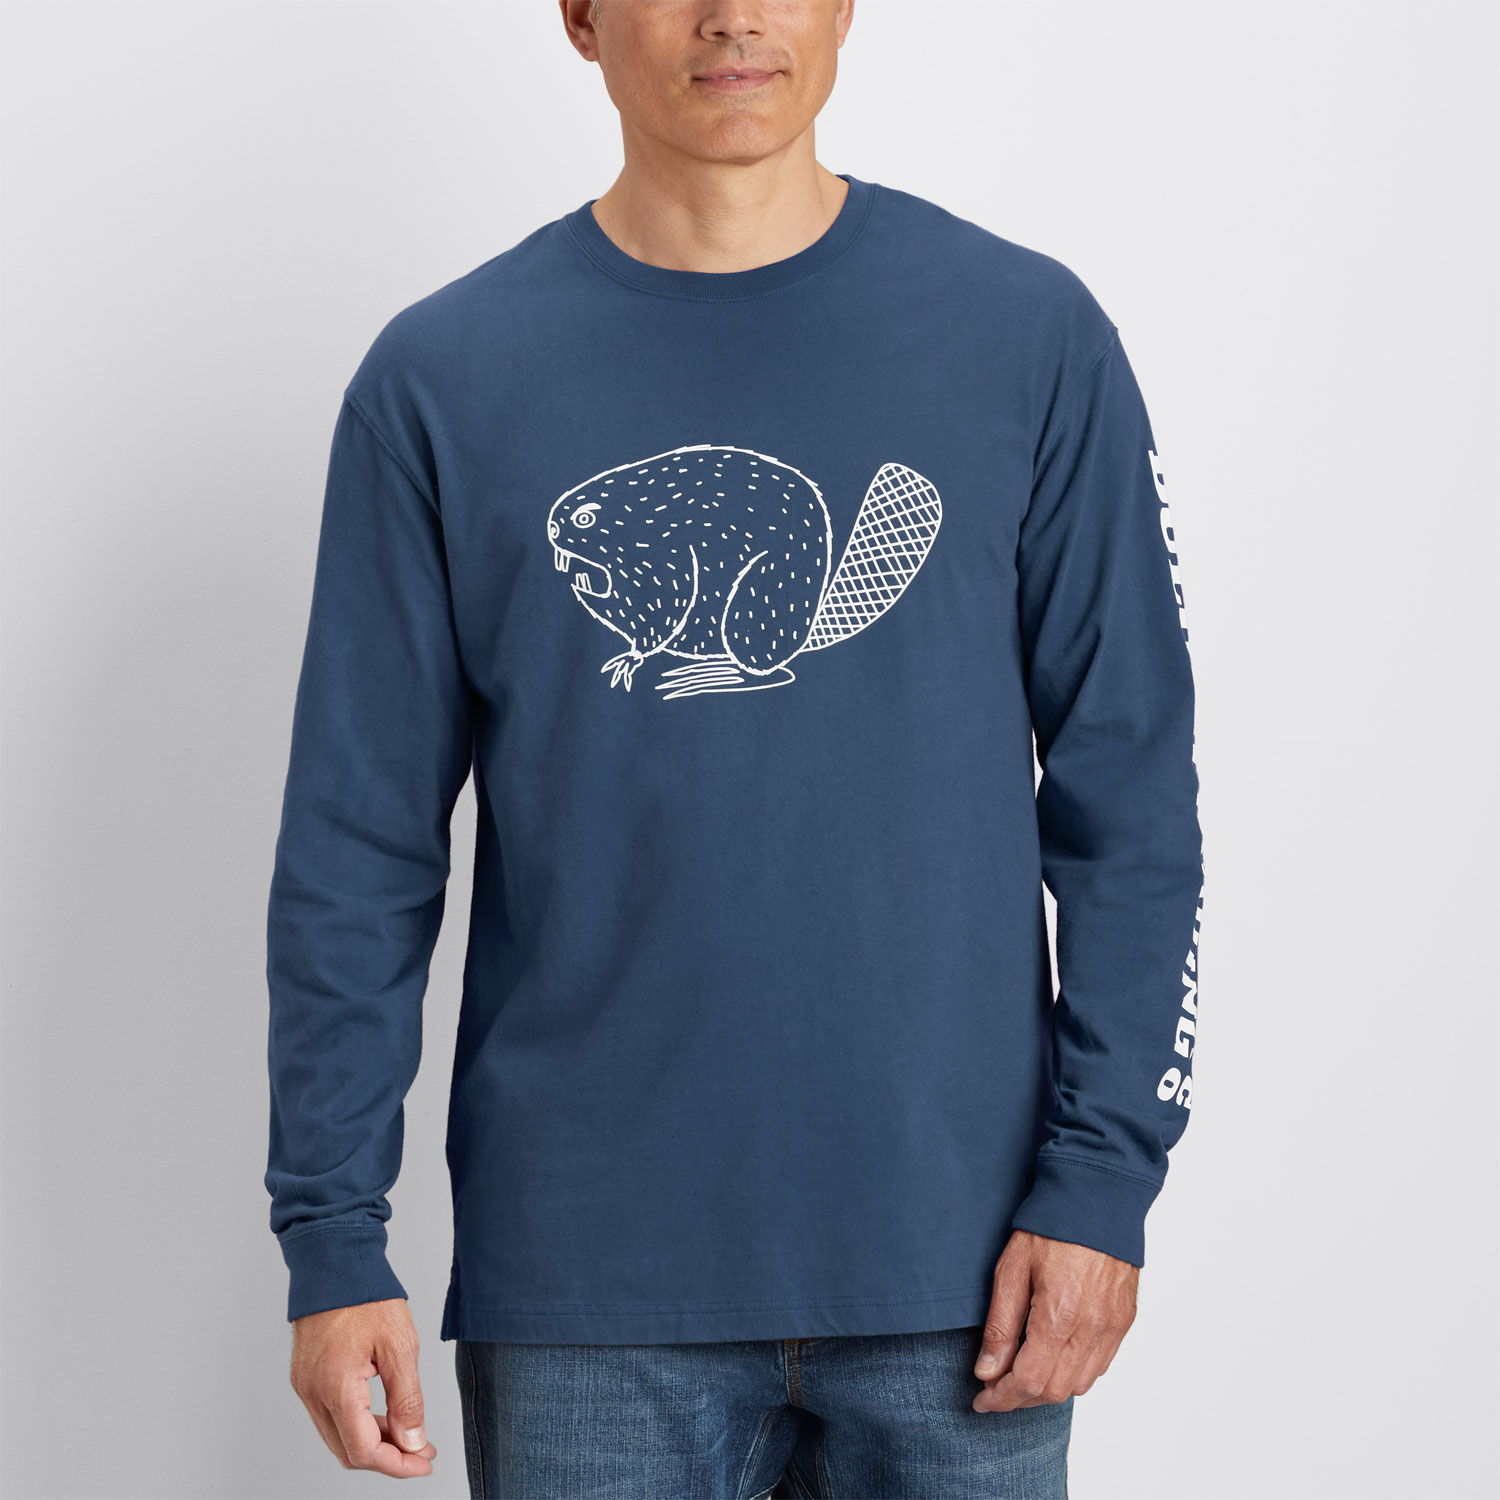 Angry Catfish Merch Long Sleeve T-shirt - Drewlr Design - Angry Catfish